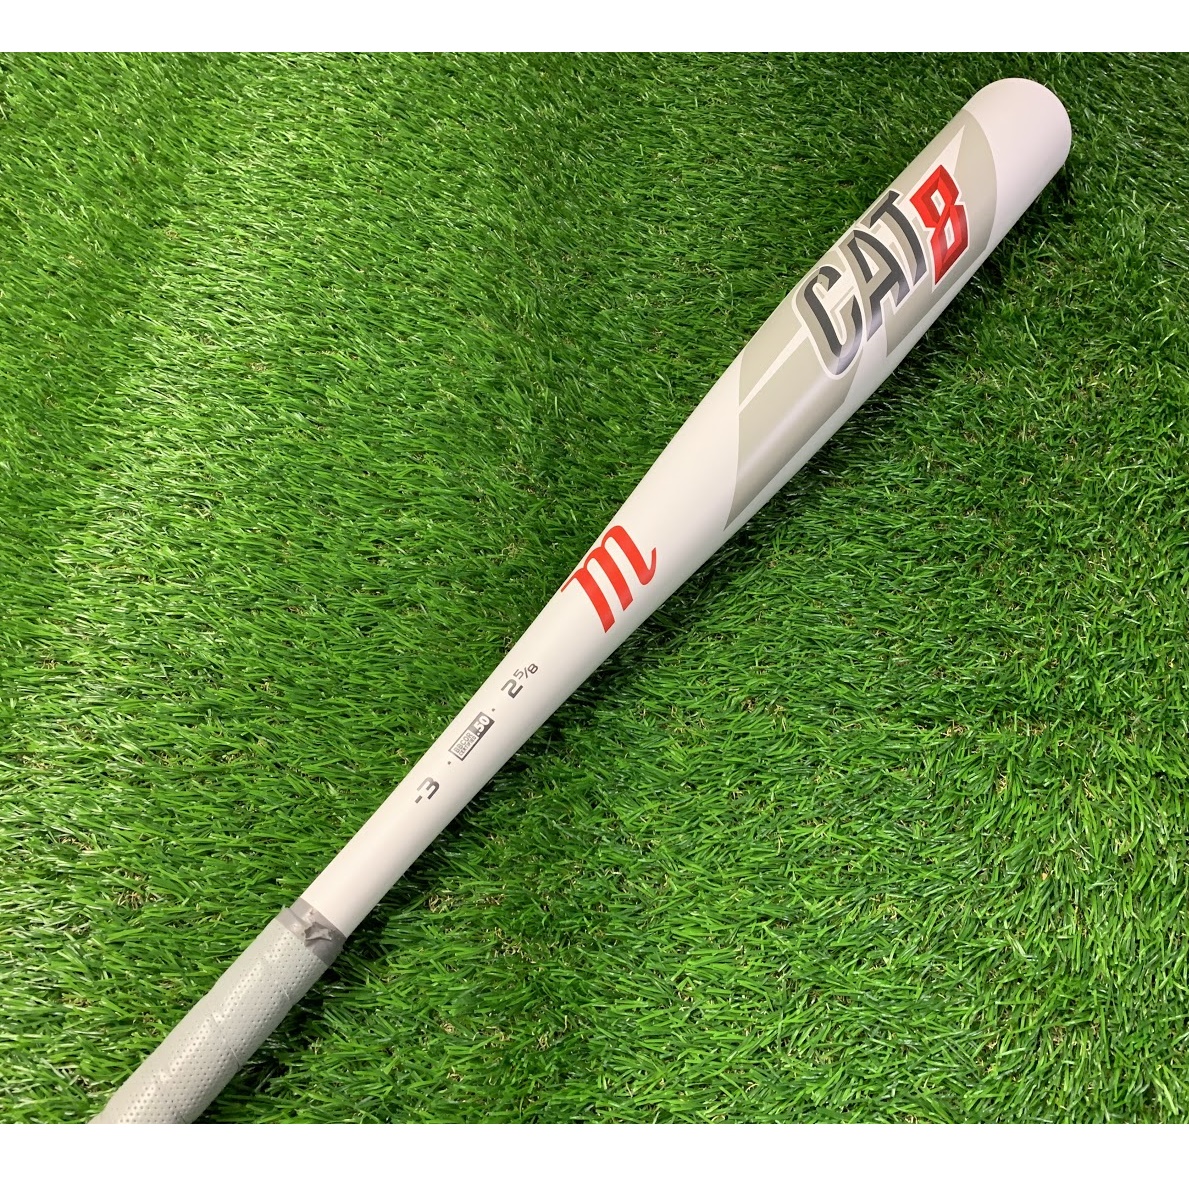 marucci-cat-8-baseball-bat-32-inch-29-oz-demo MCBC8-3229-DEMO Marucci  Demo bats are a great opportunity to pick up a high